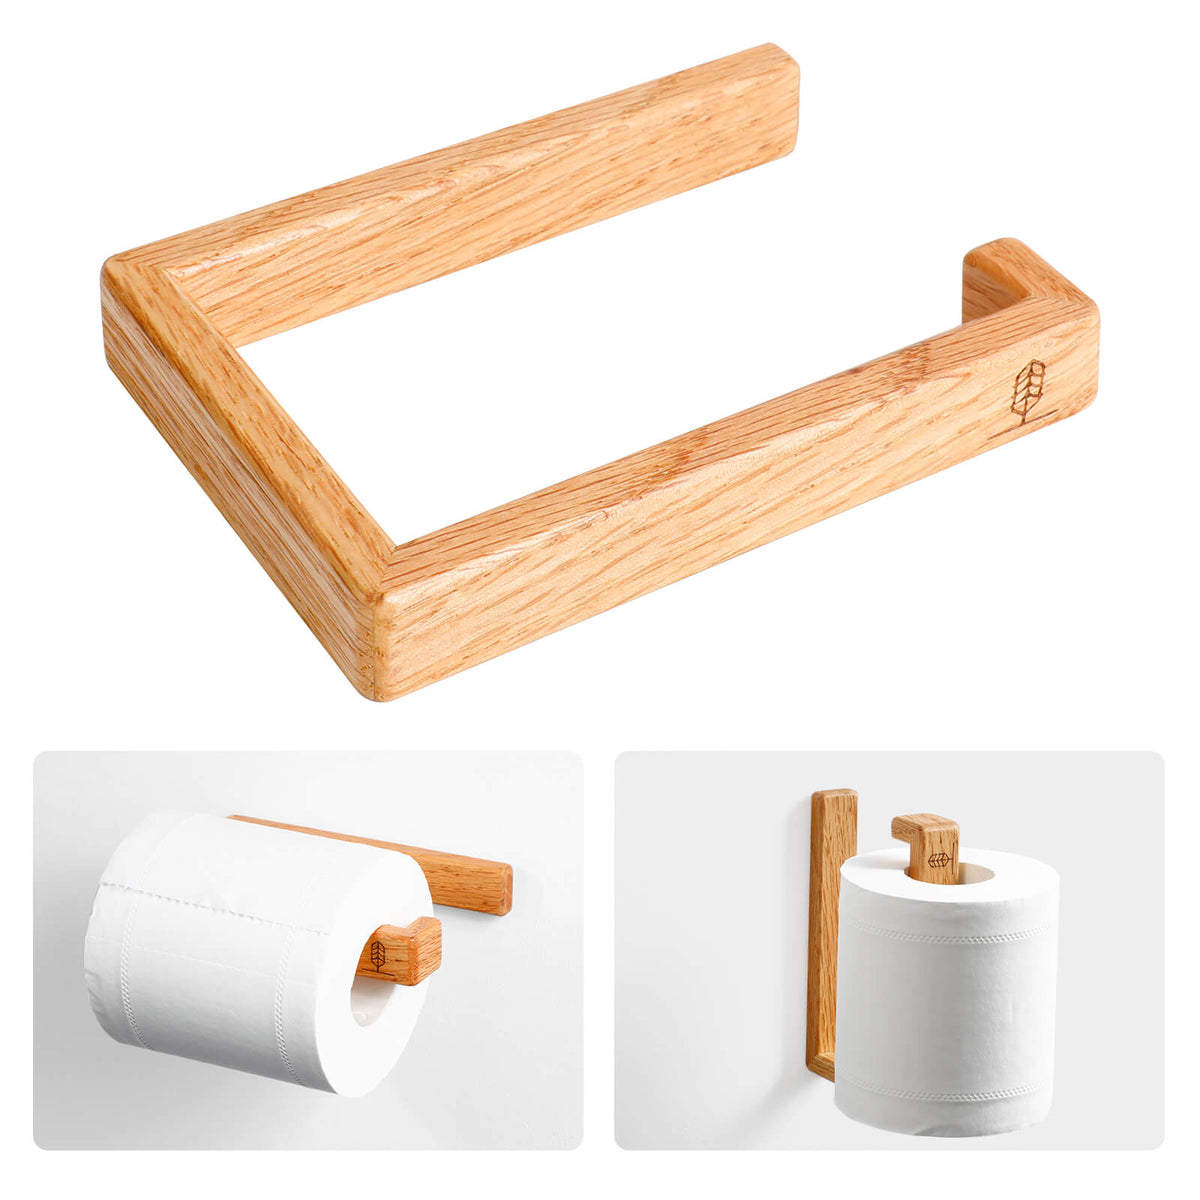 Minimalist-Toilet-Paper-Holder-Wooden-Shelf-Paper-Unroller